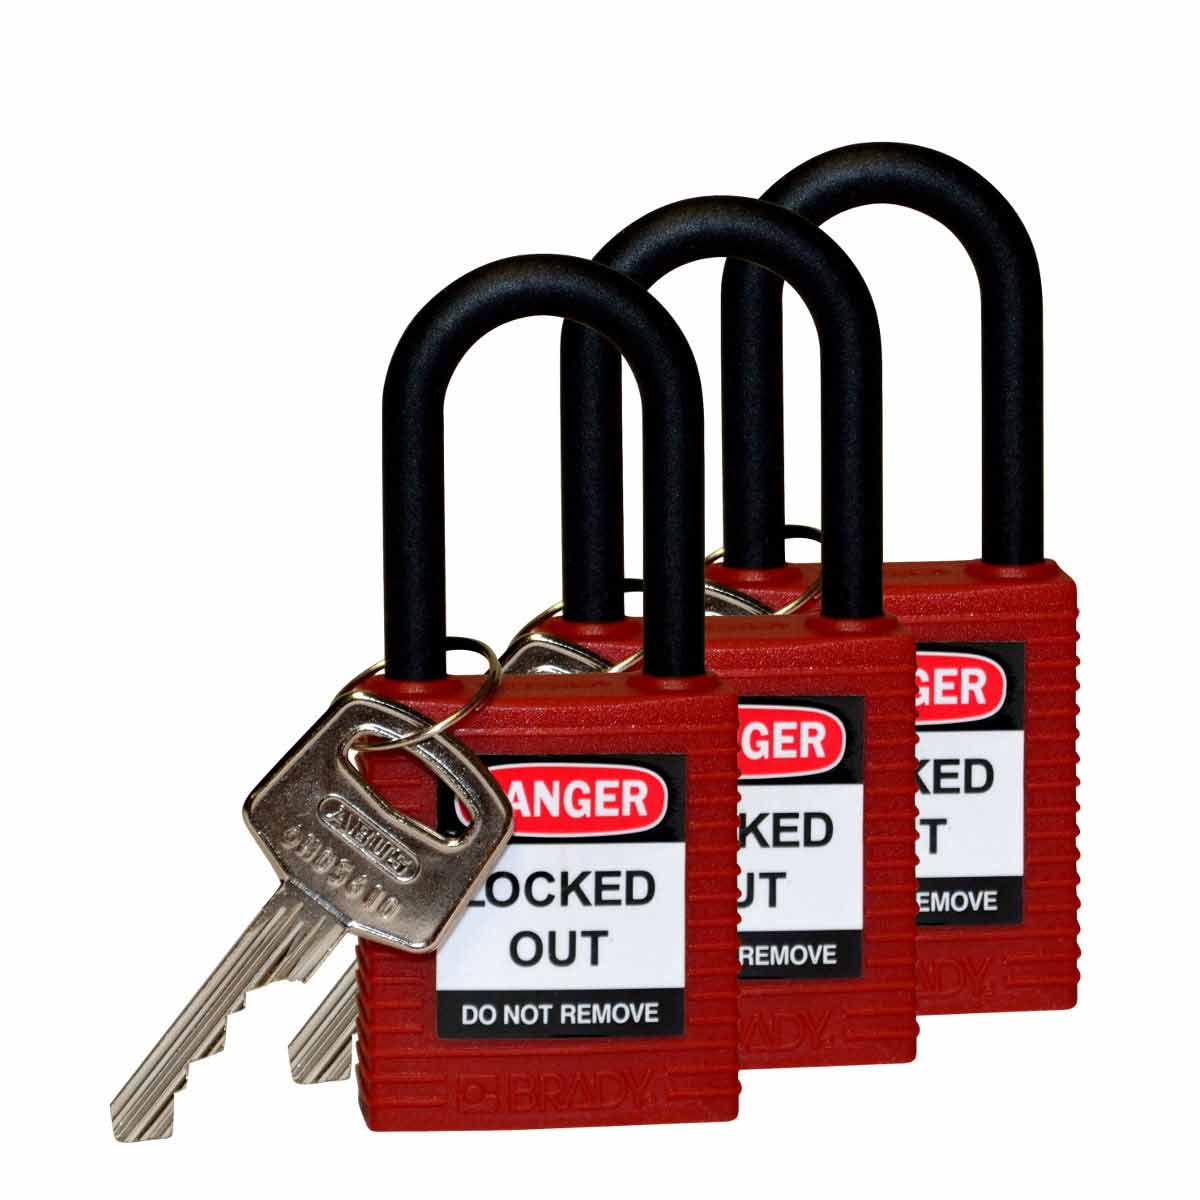 Brady Nylon Lockout Padlocks with Keyed Alike (3 Pack) from Columbia Safety